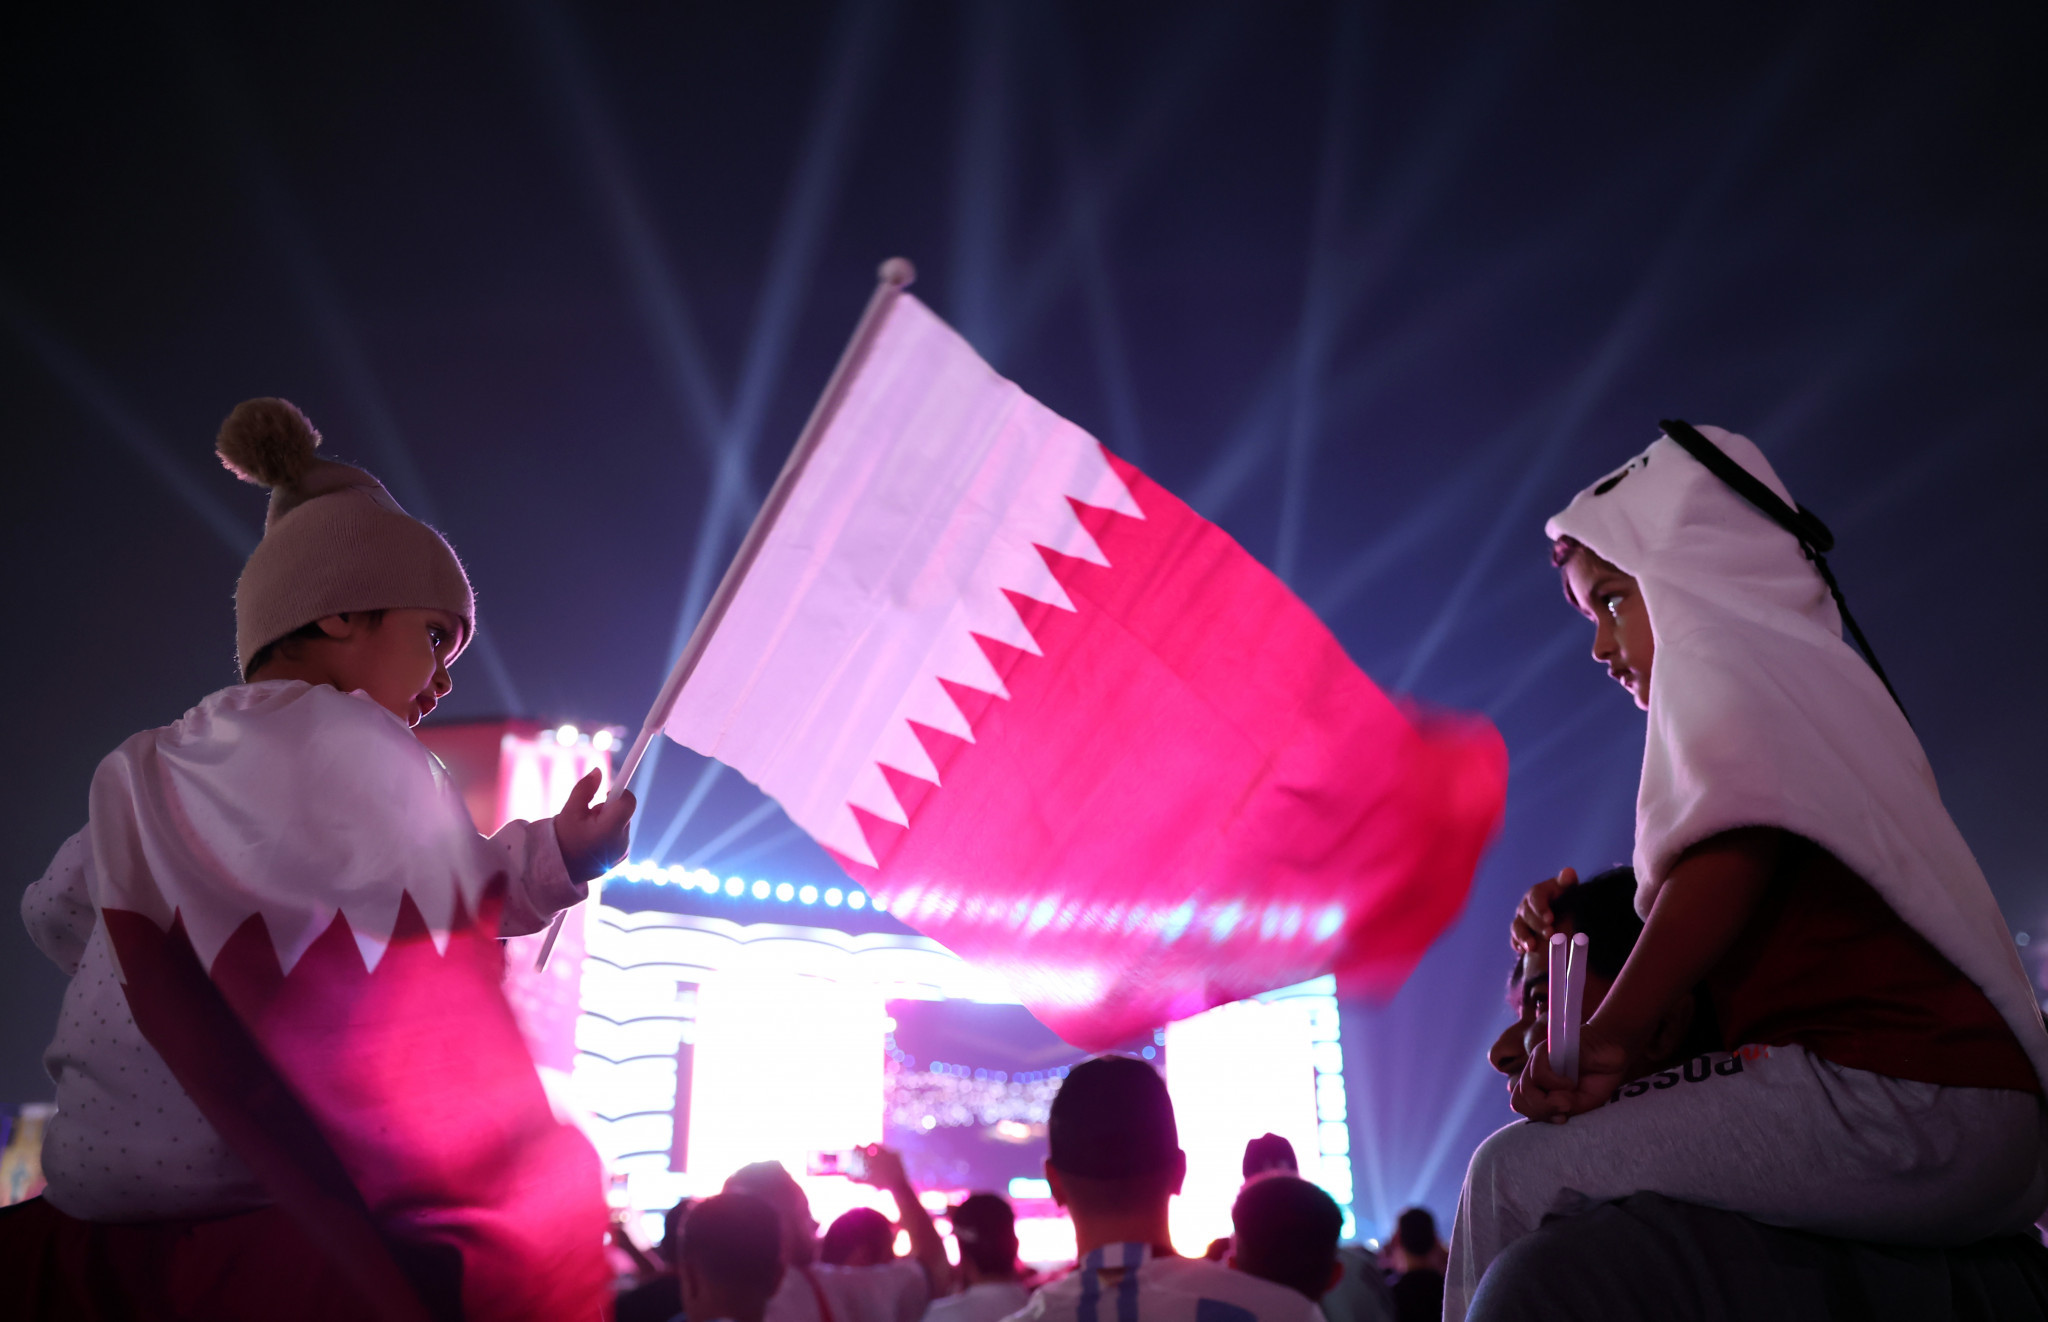 European Parliament freezes work related to World Cup host Qatar amid bribery probe